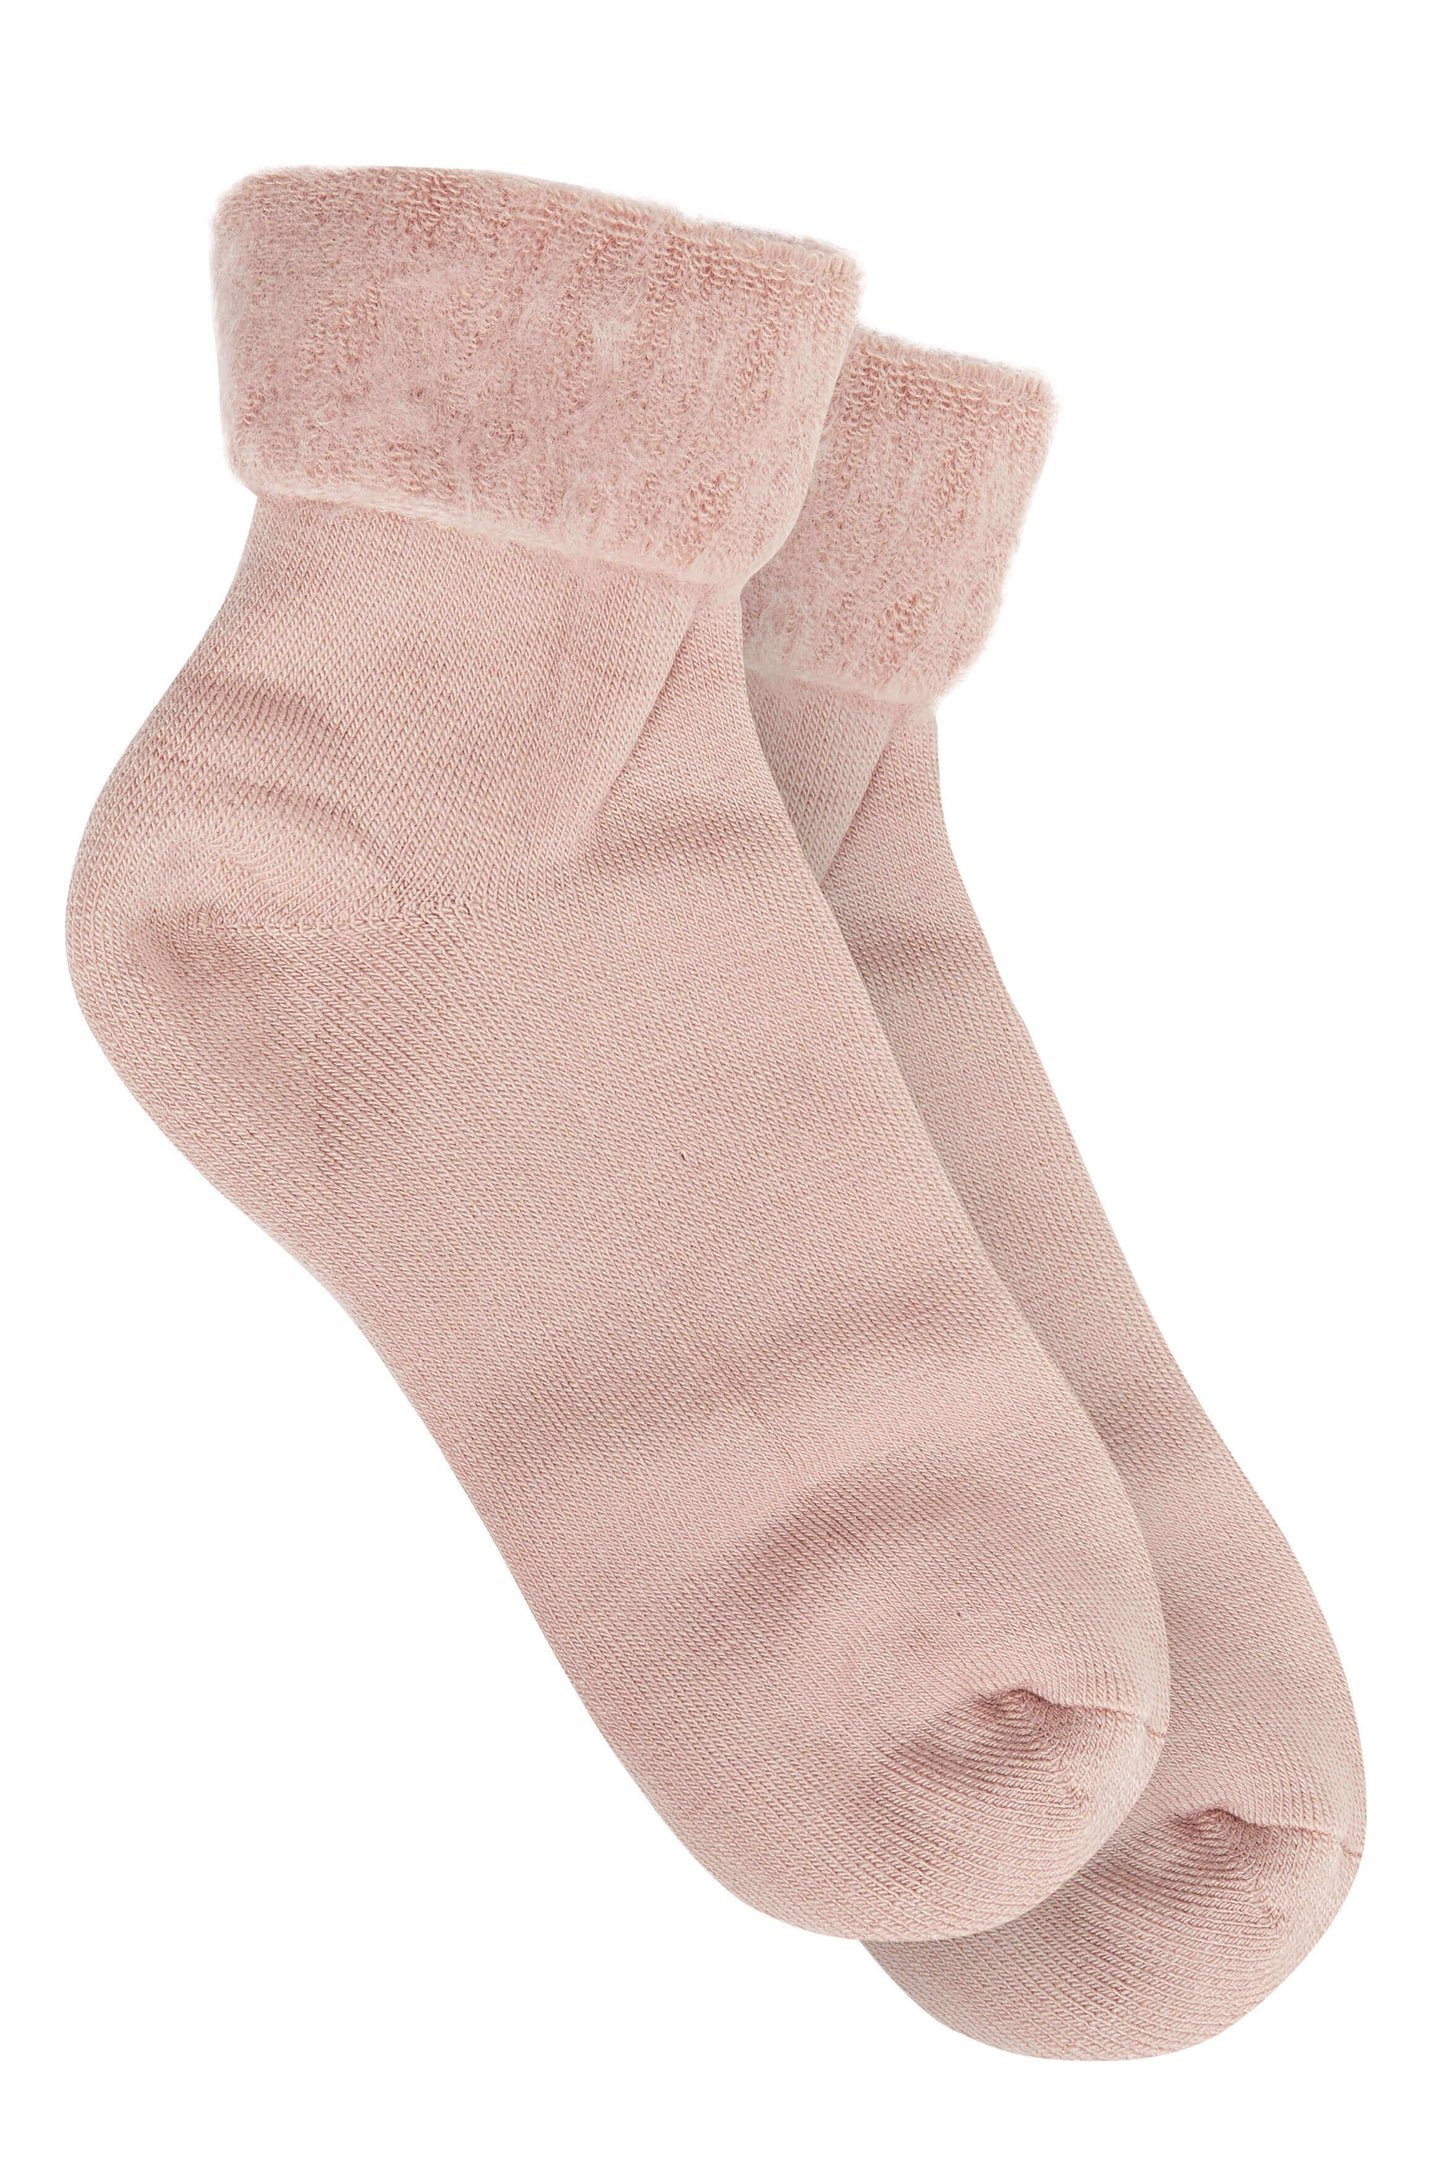 Pack Of 3 Women's Bed Socks Thermal Super Soft Slipper Socks Winter. Buy now for £8.00. A Socks by Sock Stack. 4-7, aqua, assorted, blue, blush pink, boot socks, christmas, cosy, cream, designer, fluffy, fluffy pink, footwear, girls, girls socks, green, h